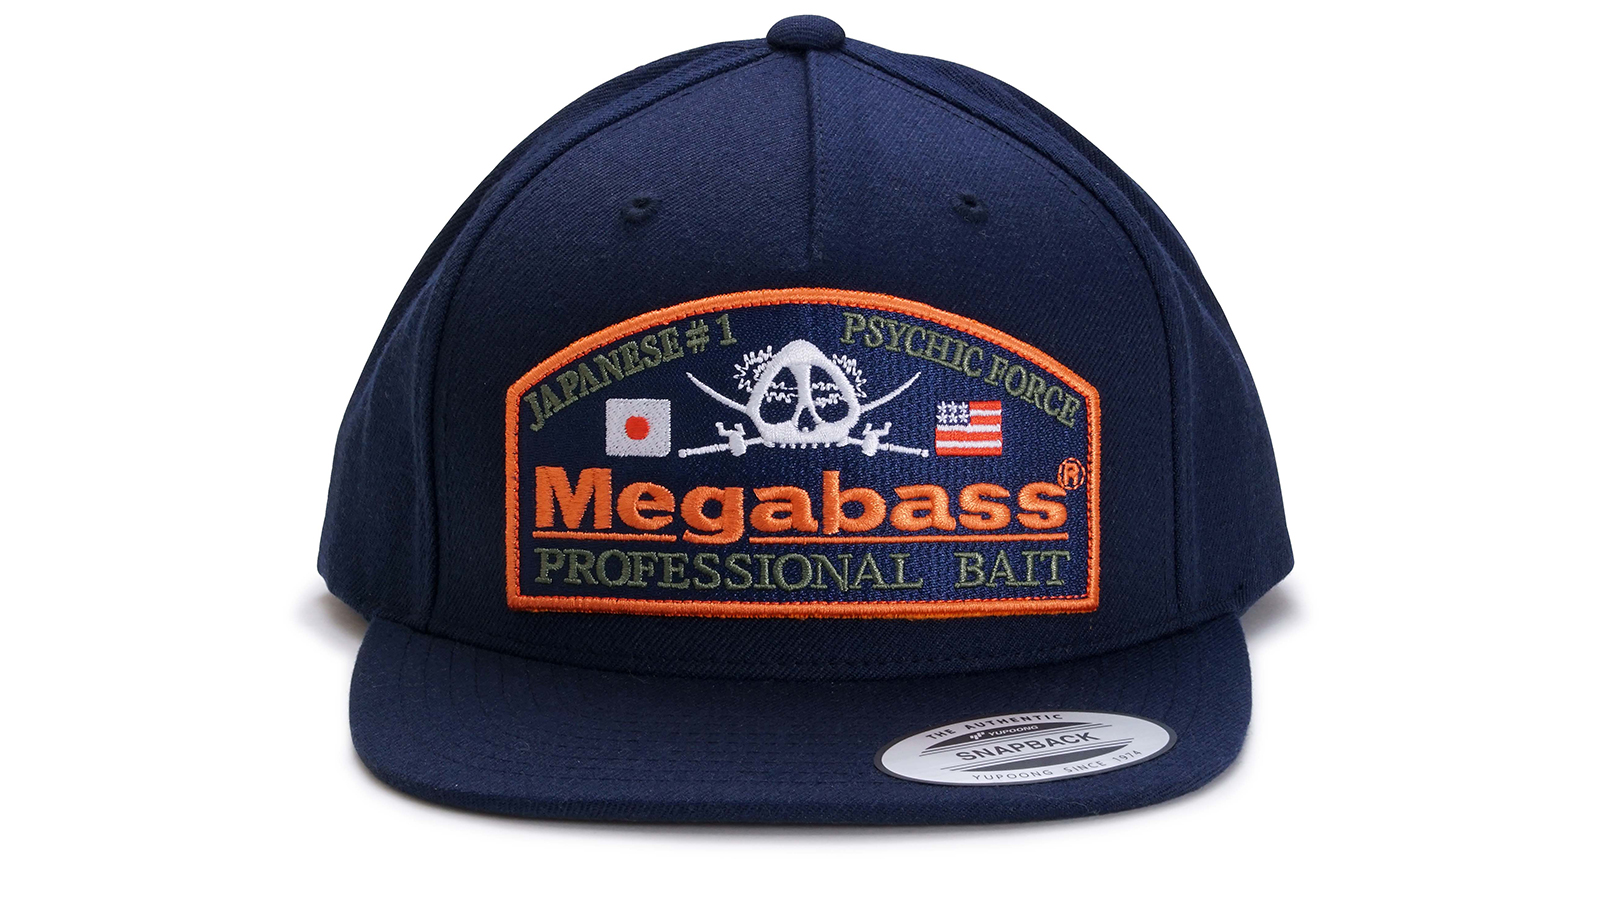 Megabass Psychic Snapback Navy/Navy - Megabass